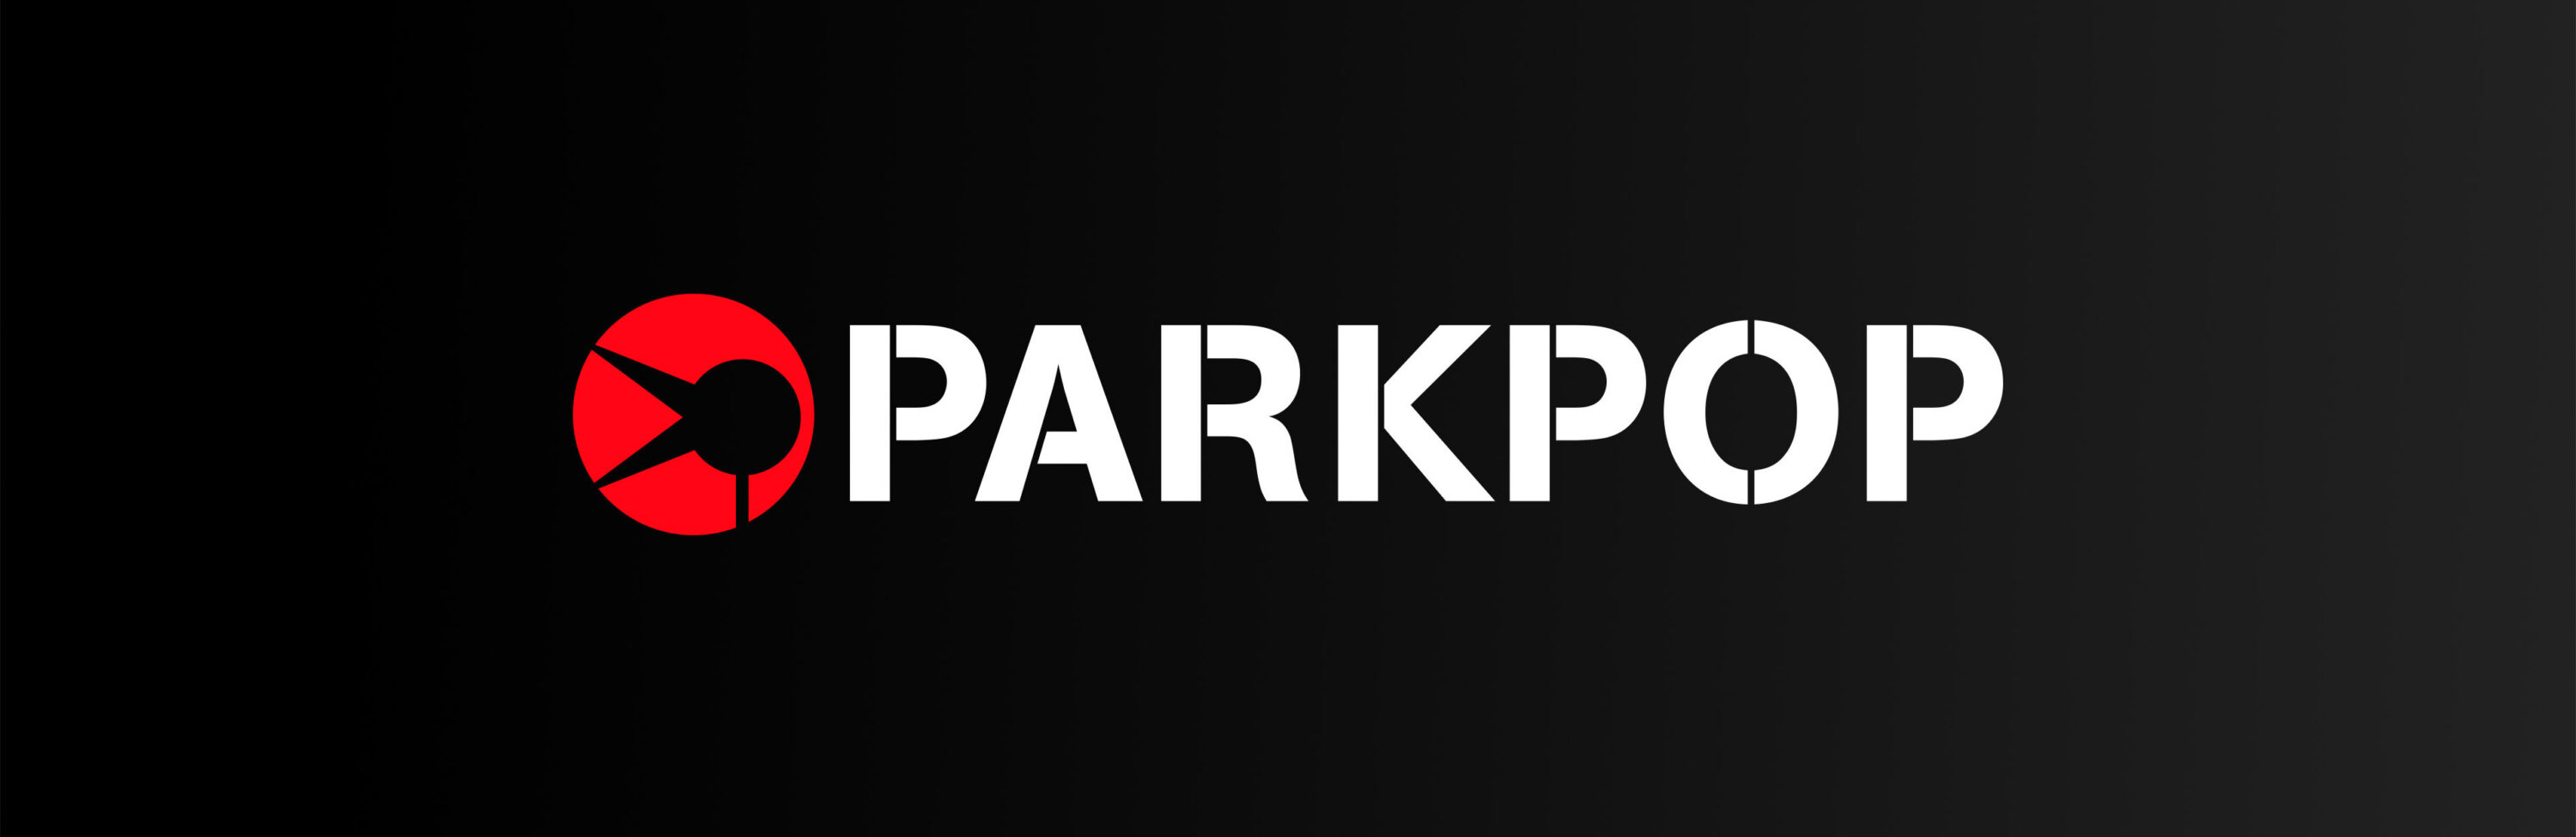 Parkpop